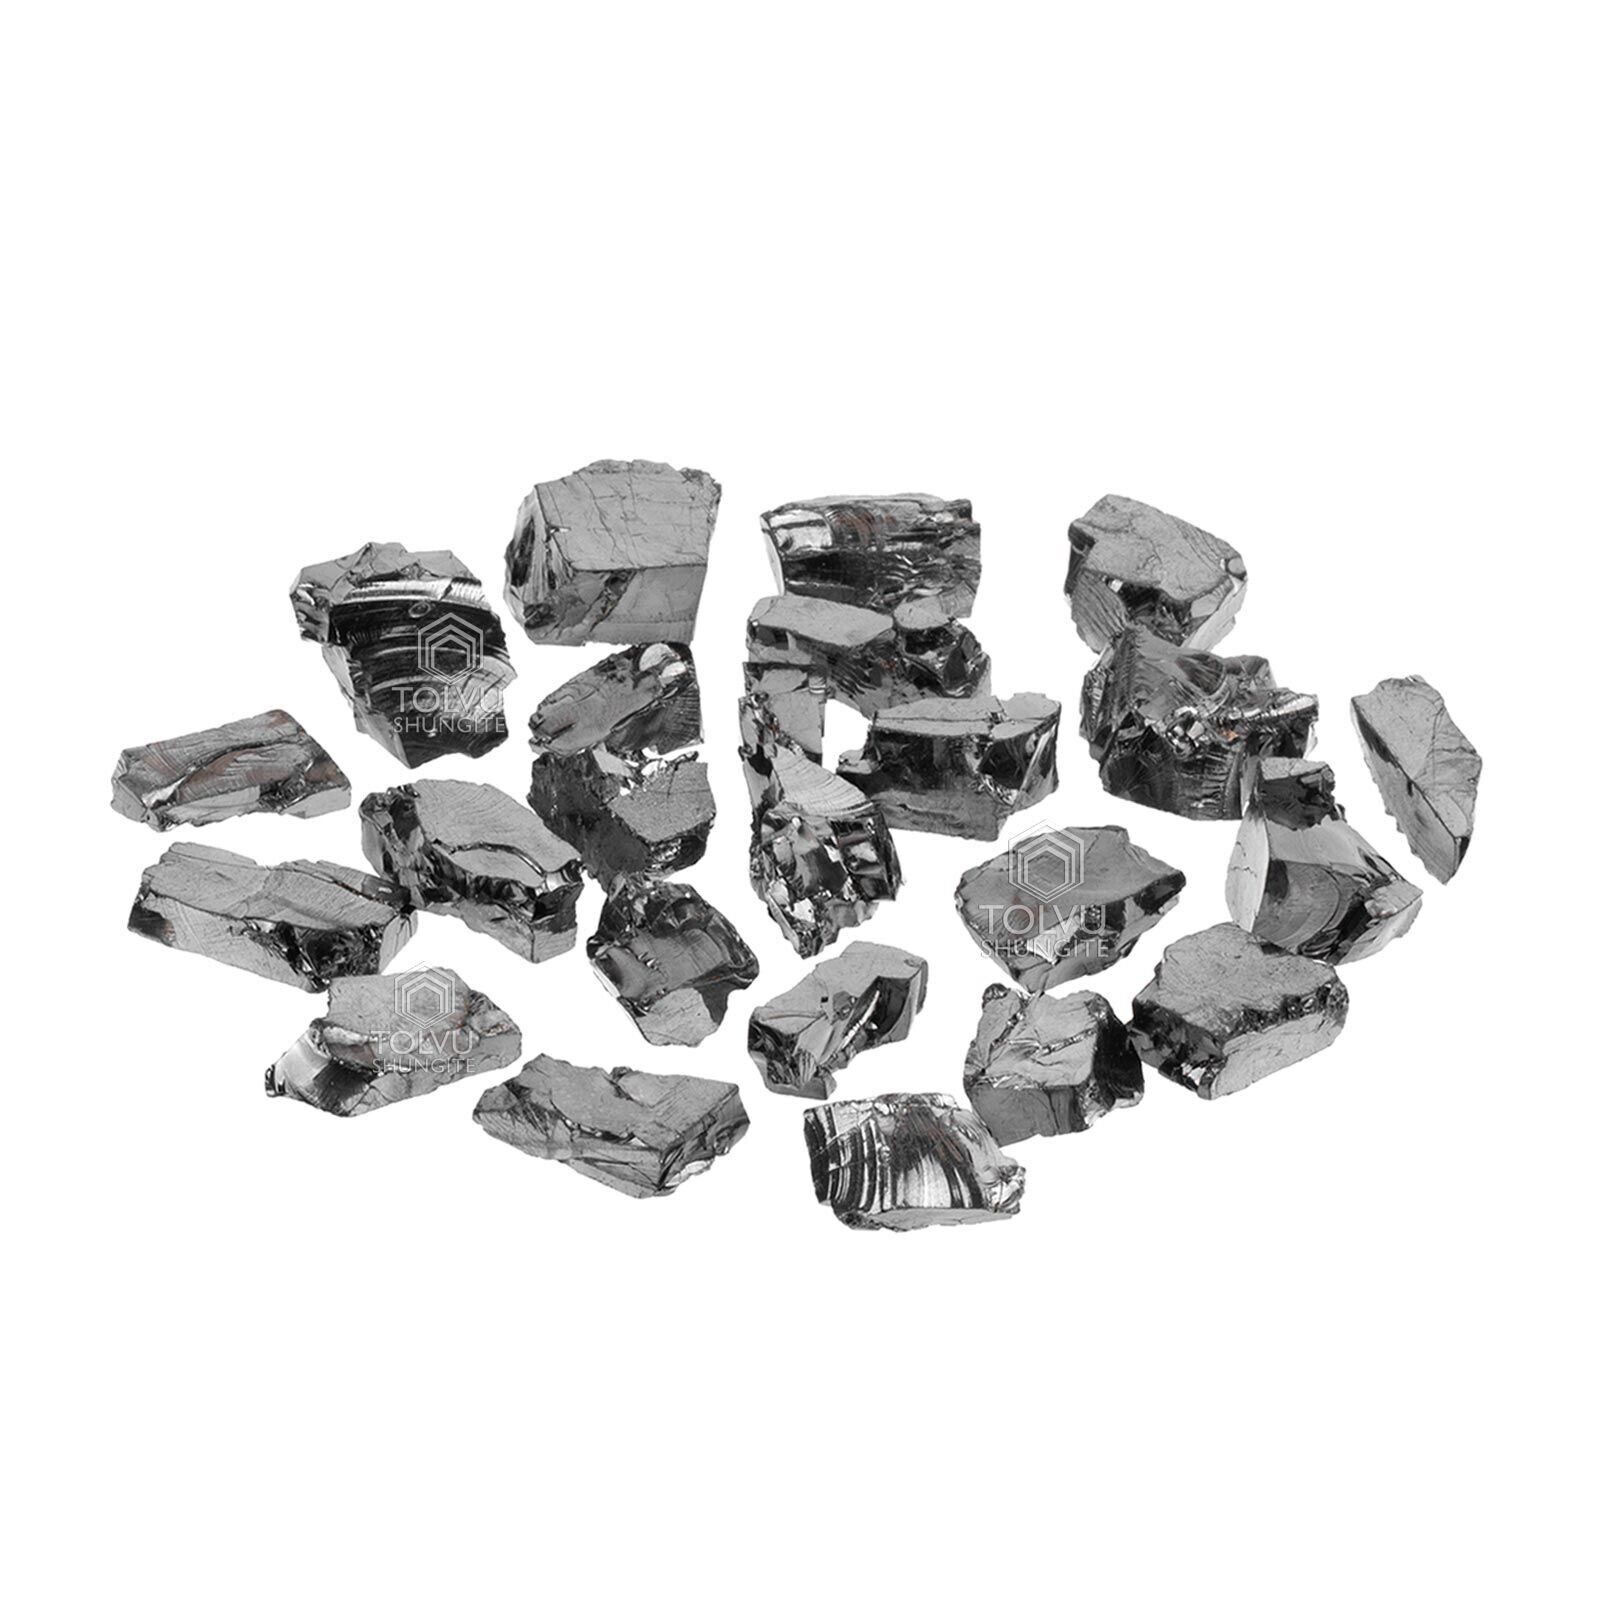 Elite Shungite stones carbon 98%, medium size, Russian Natural mineral, Tolvu